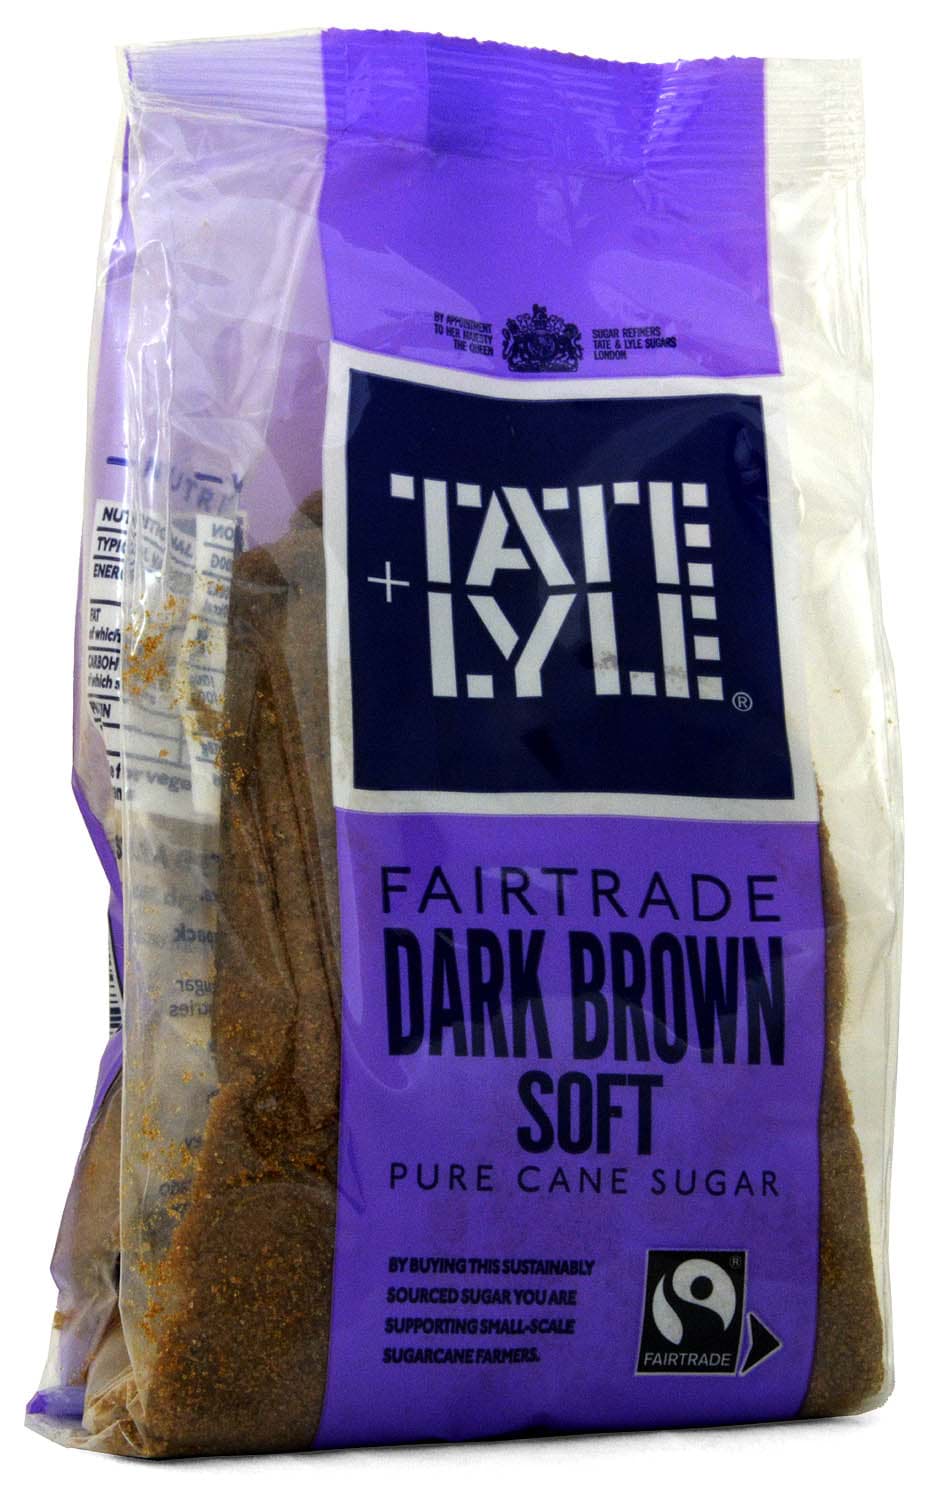 Tate & Lyle Fairtrade Light Muscovado Sugar 500g